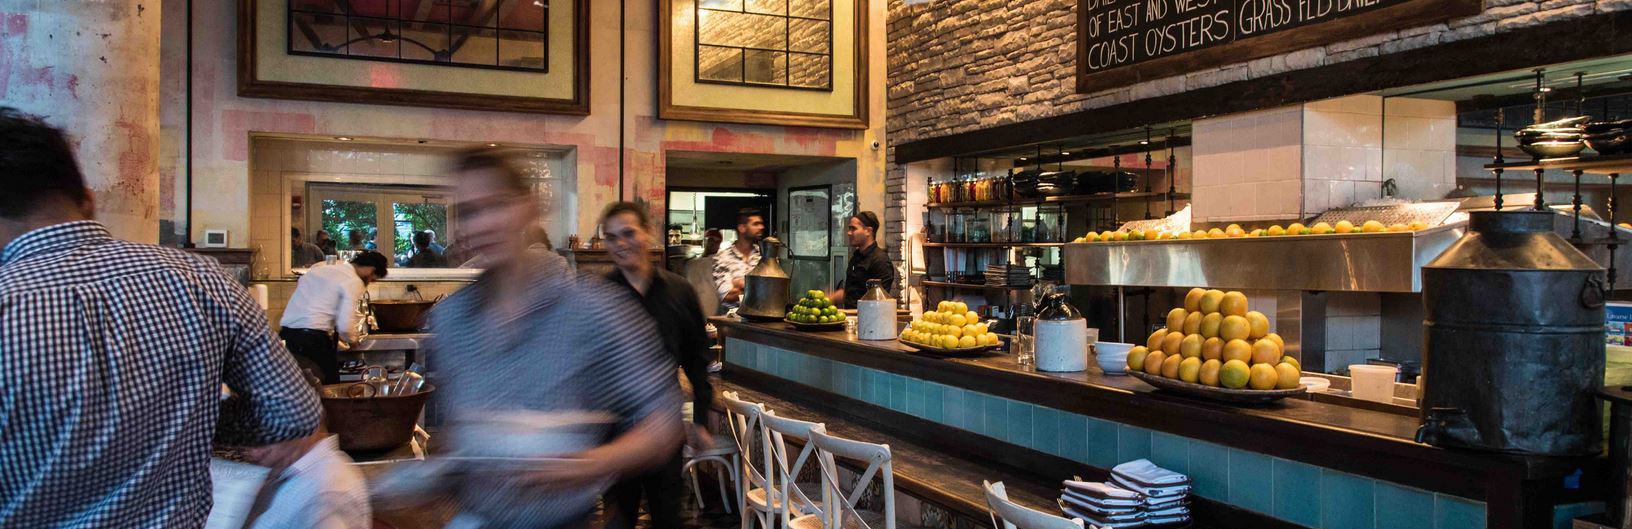 The top 5 restaurants of Miami's Design District